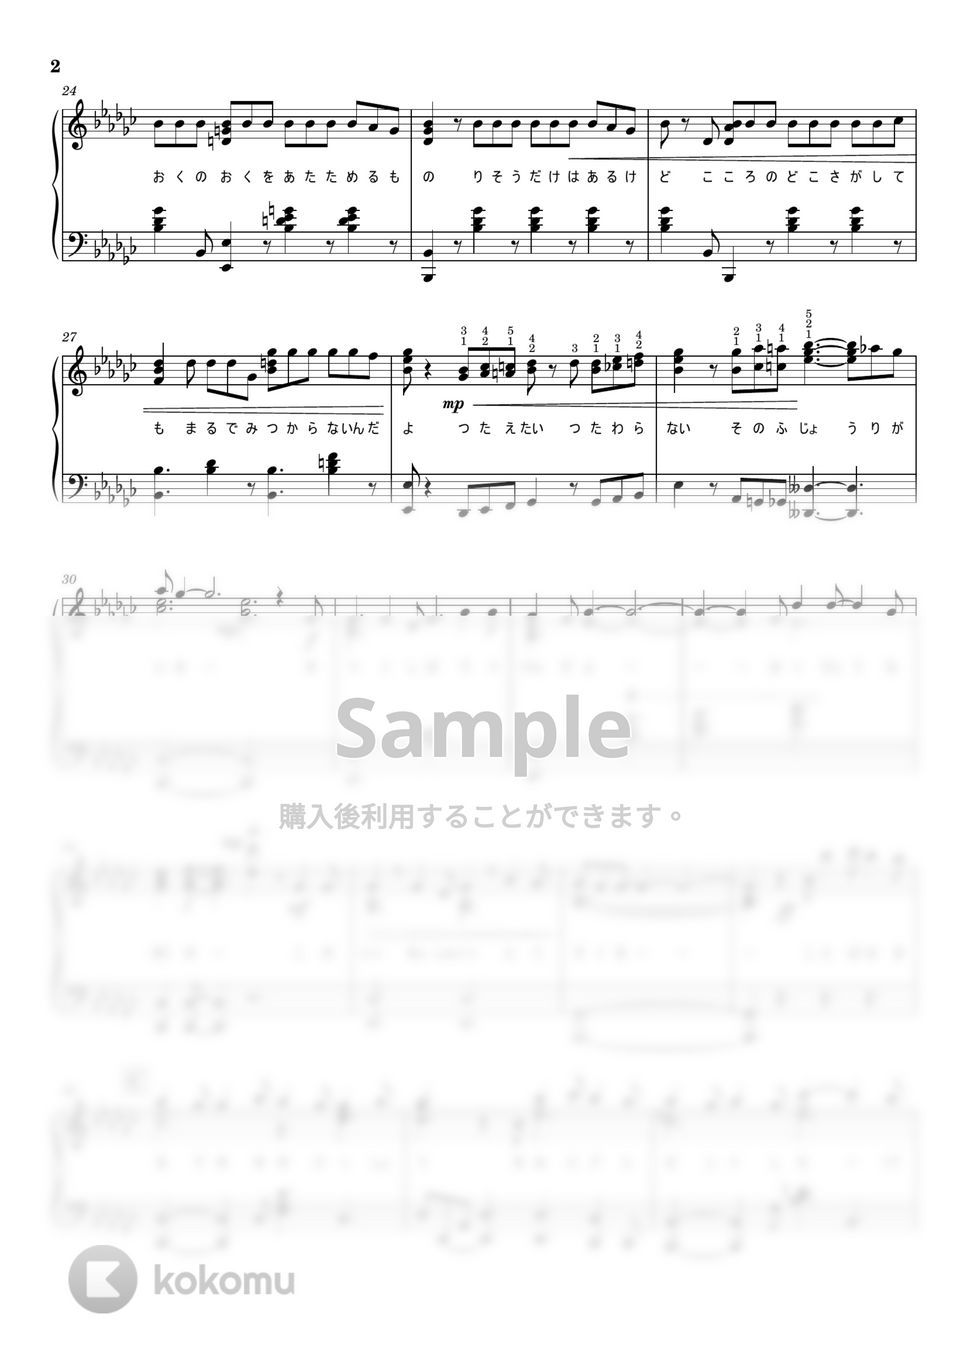 Official髭男dism - Subtitle (ピアノソロ/歌詞付き/指使い付き/自動演奏動画あり/) by jpopピアノ楽譜チャンネル